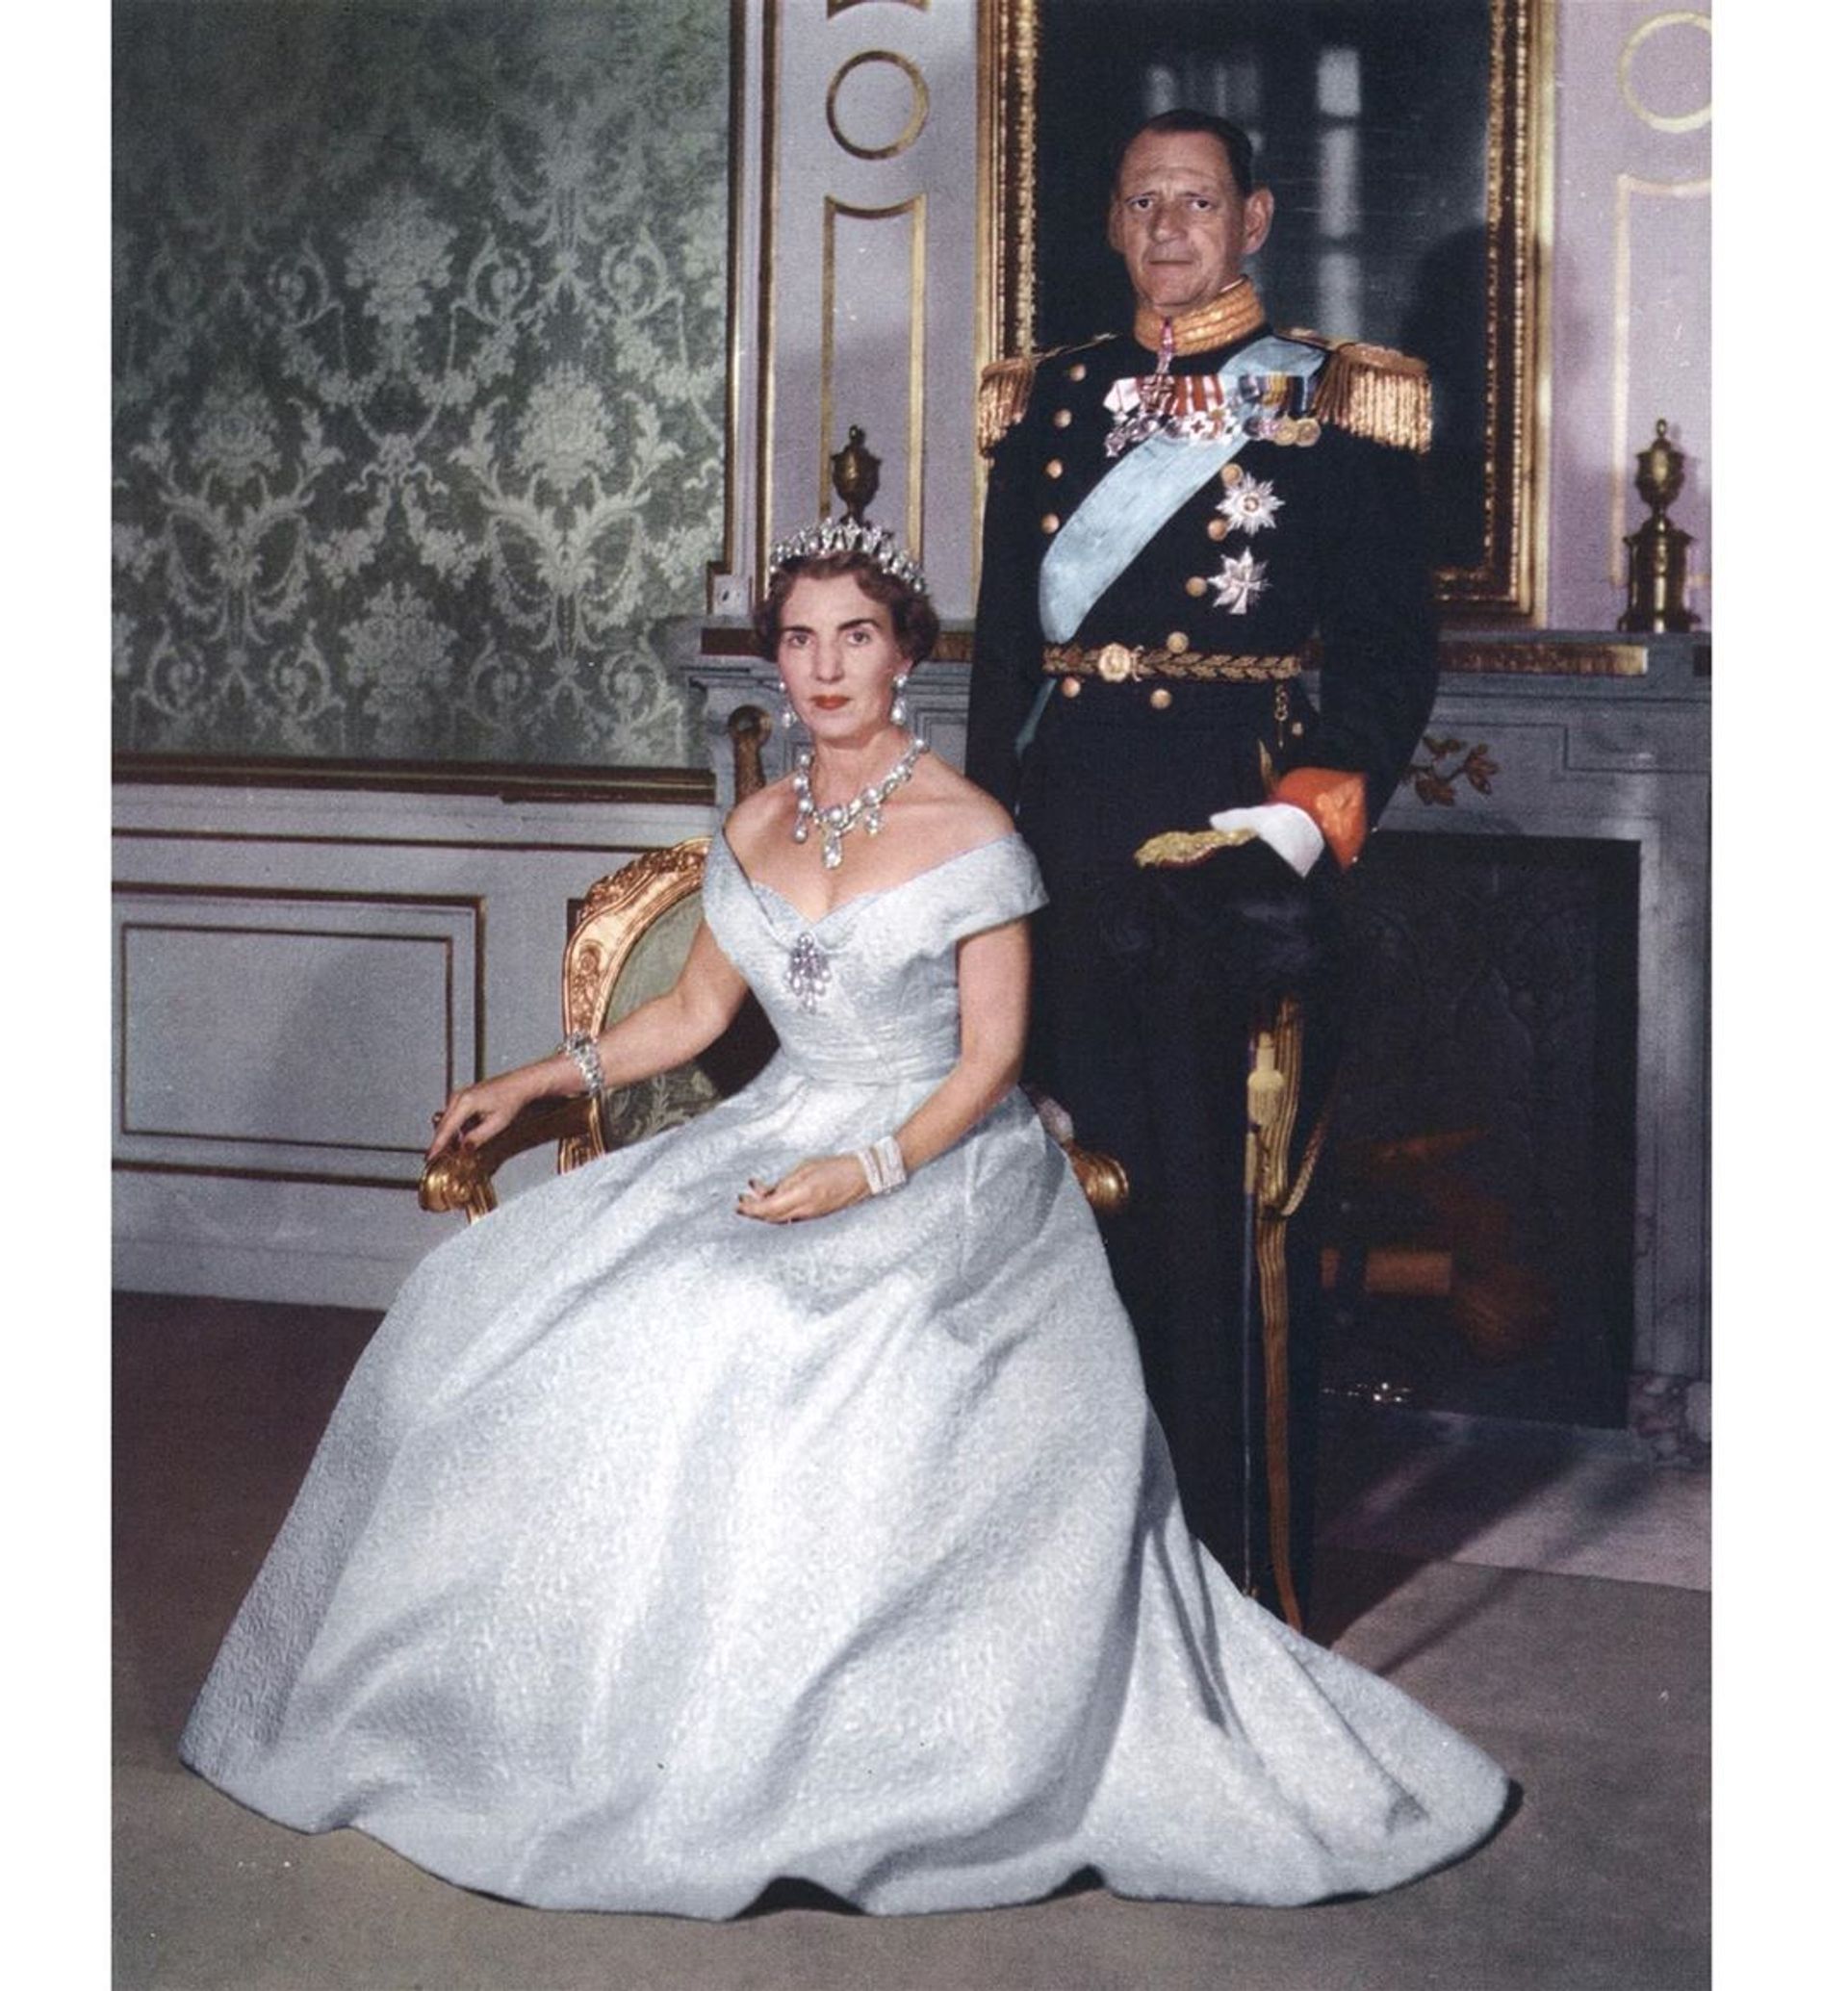 Staatsportret van koning Frederik IX en koningin Ingrid uit 1960.